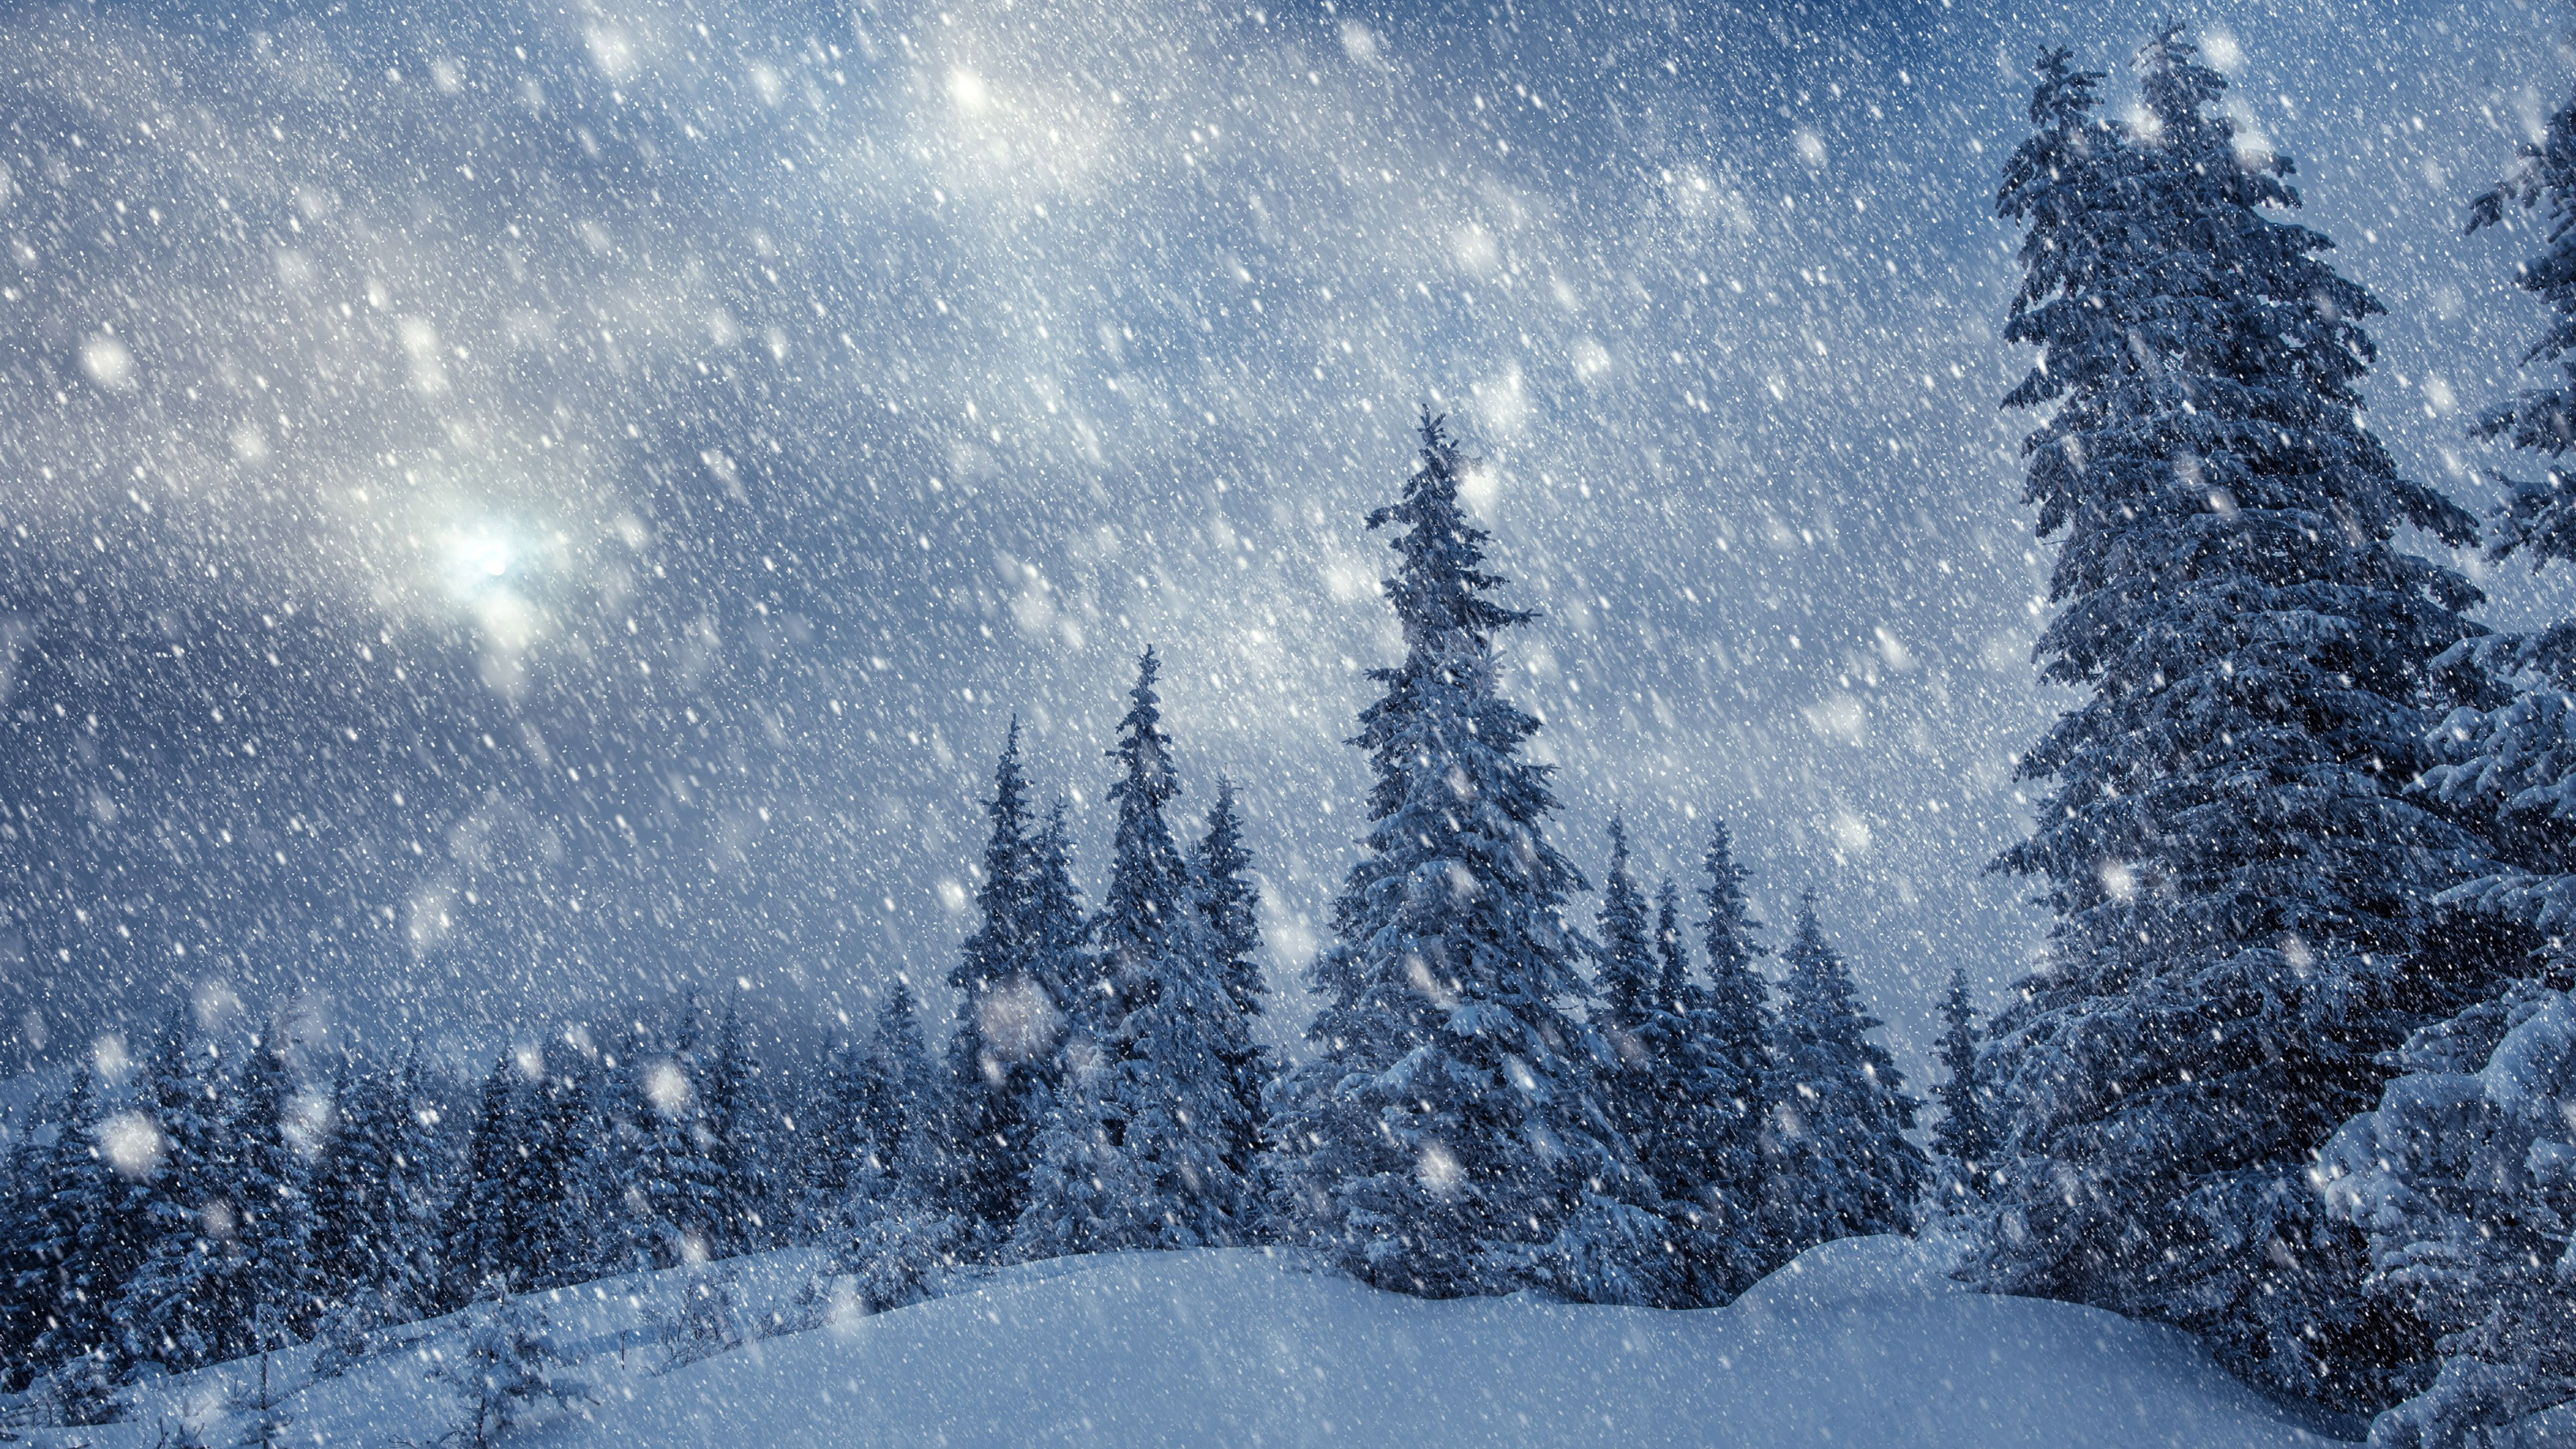 Snowfall. Снег. Падающий снег. Метель в лесу. Зимний лес метель.